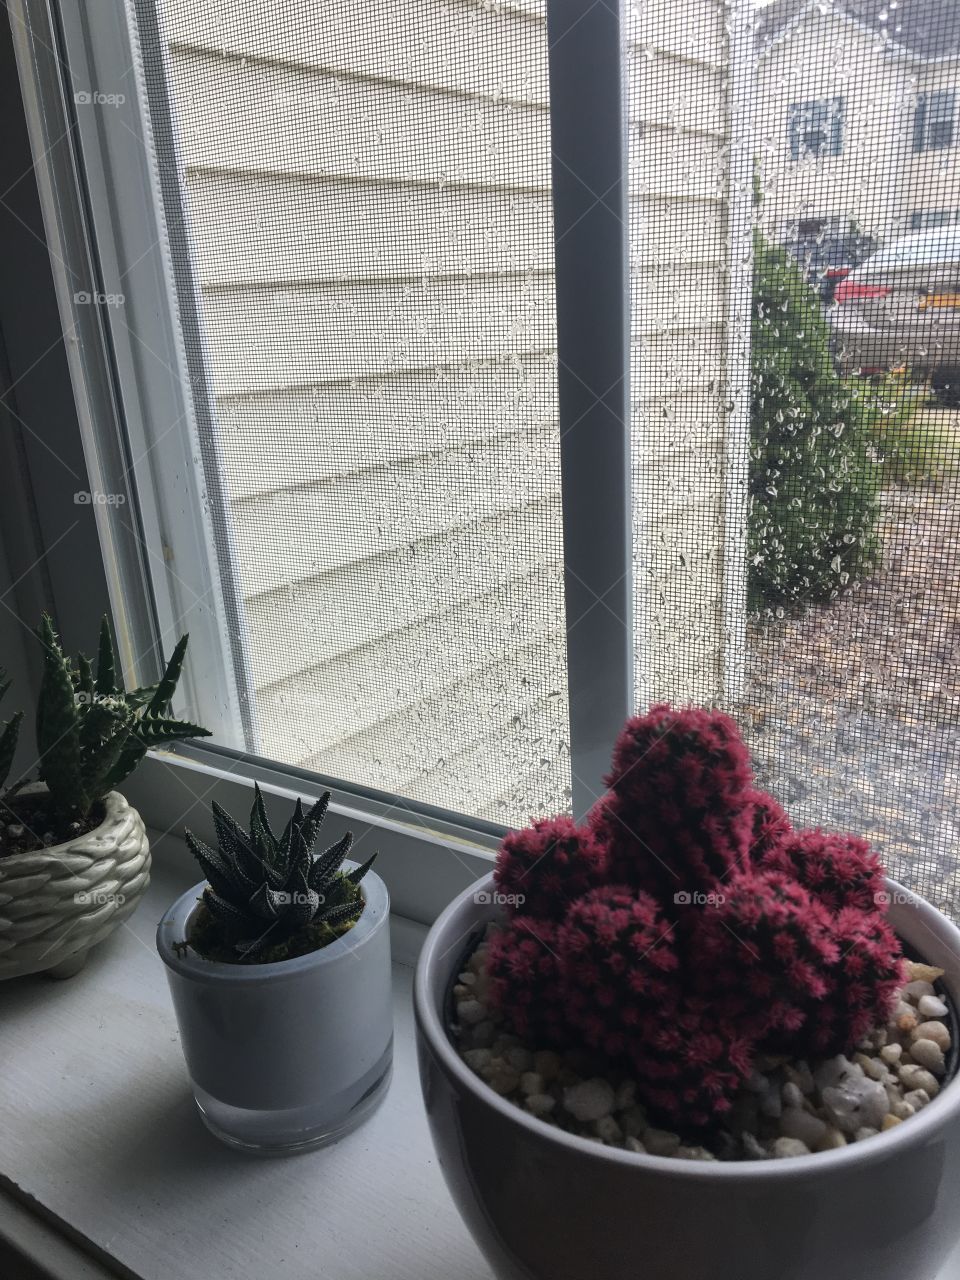 Plants on the window sill
